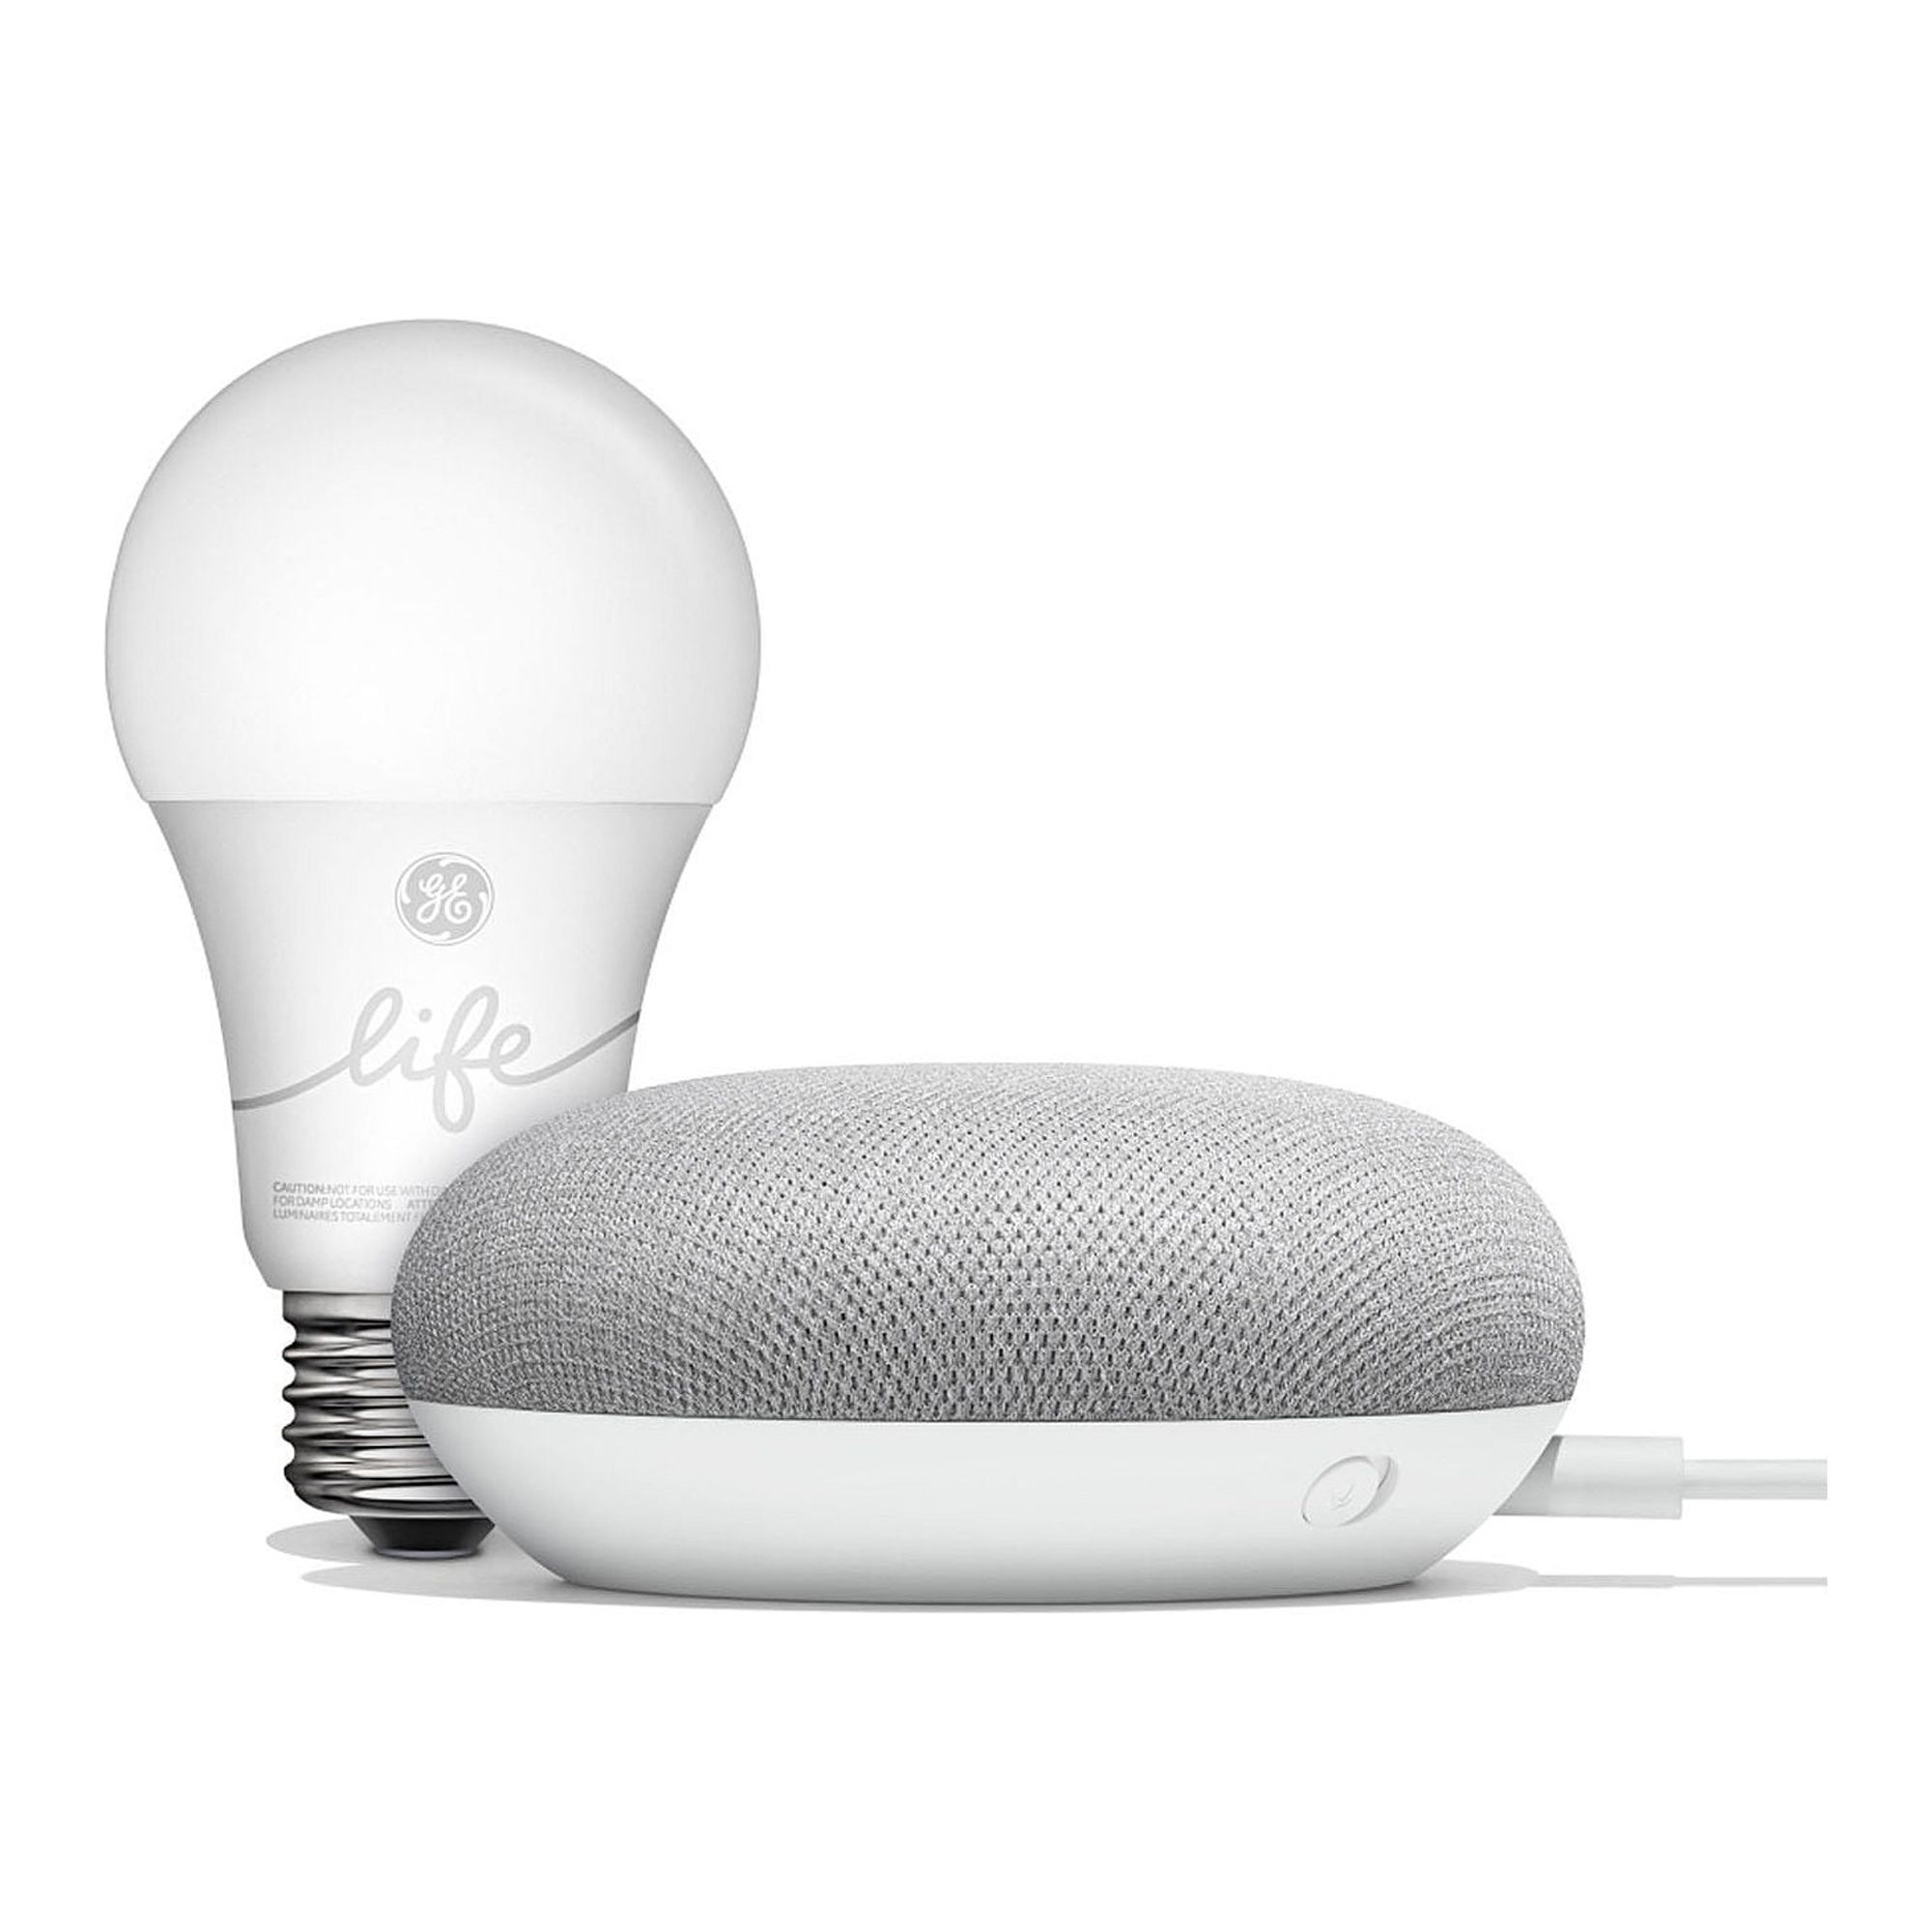 Google Smart Light Starter Kit - Google Home Mini and GE C-Life Smart Light Bulb - image 1 of 5